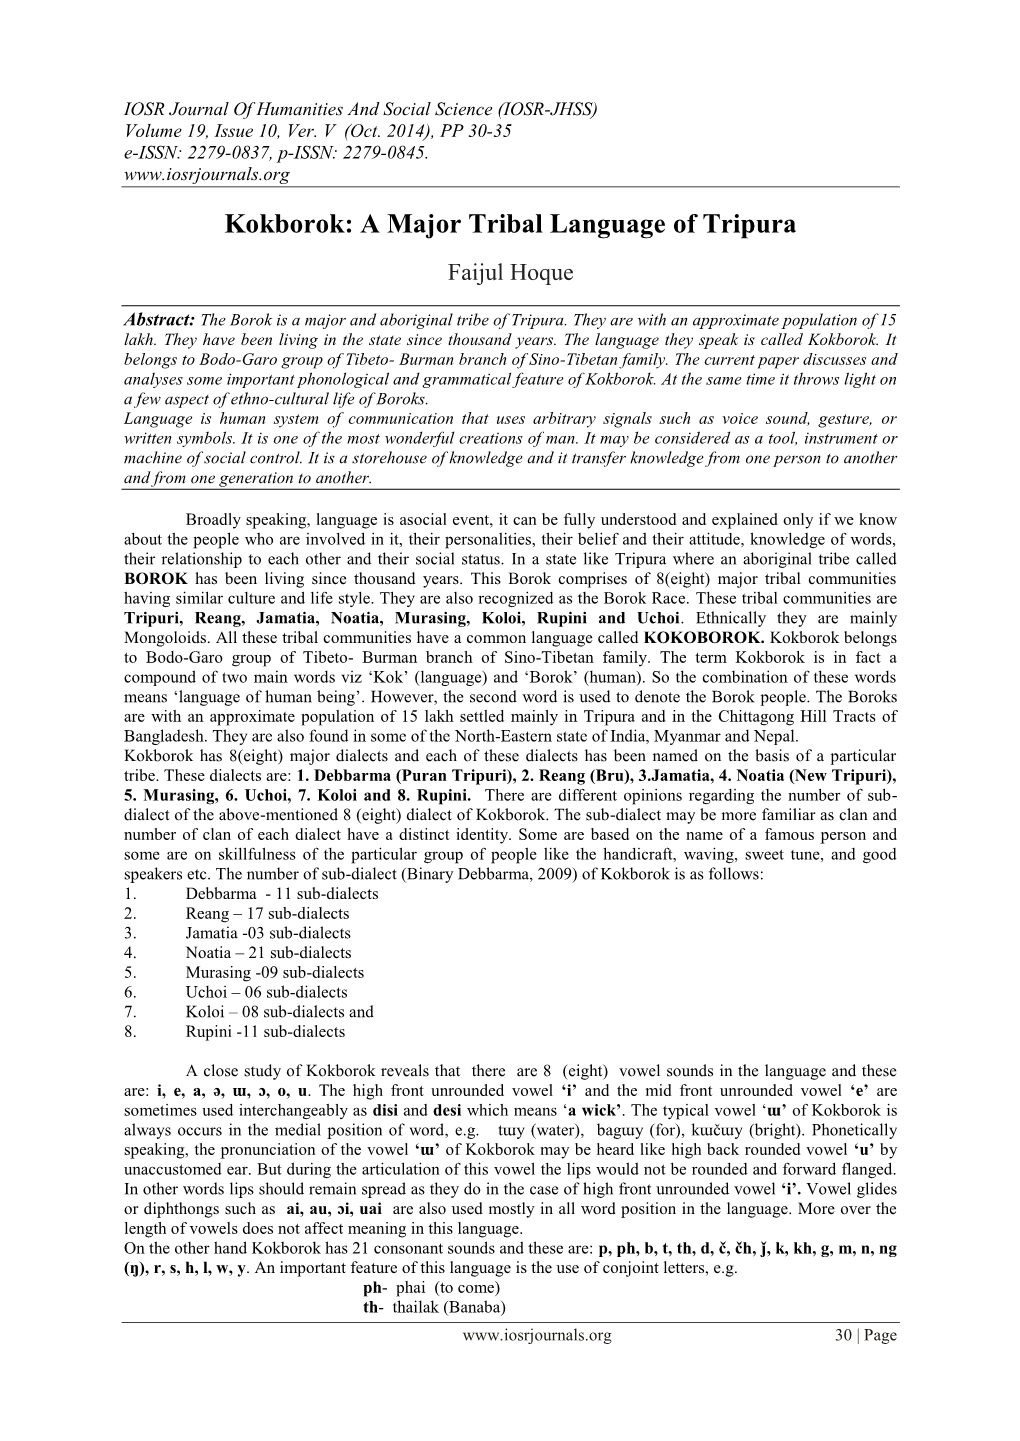 Kokborok: a Major Tribal Language of Tripura